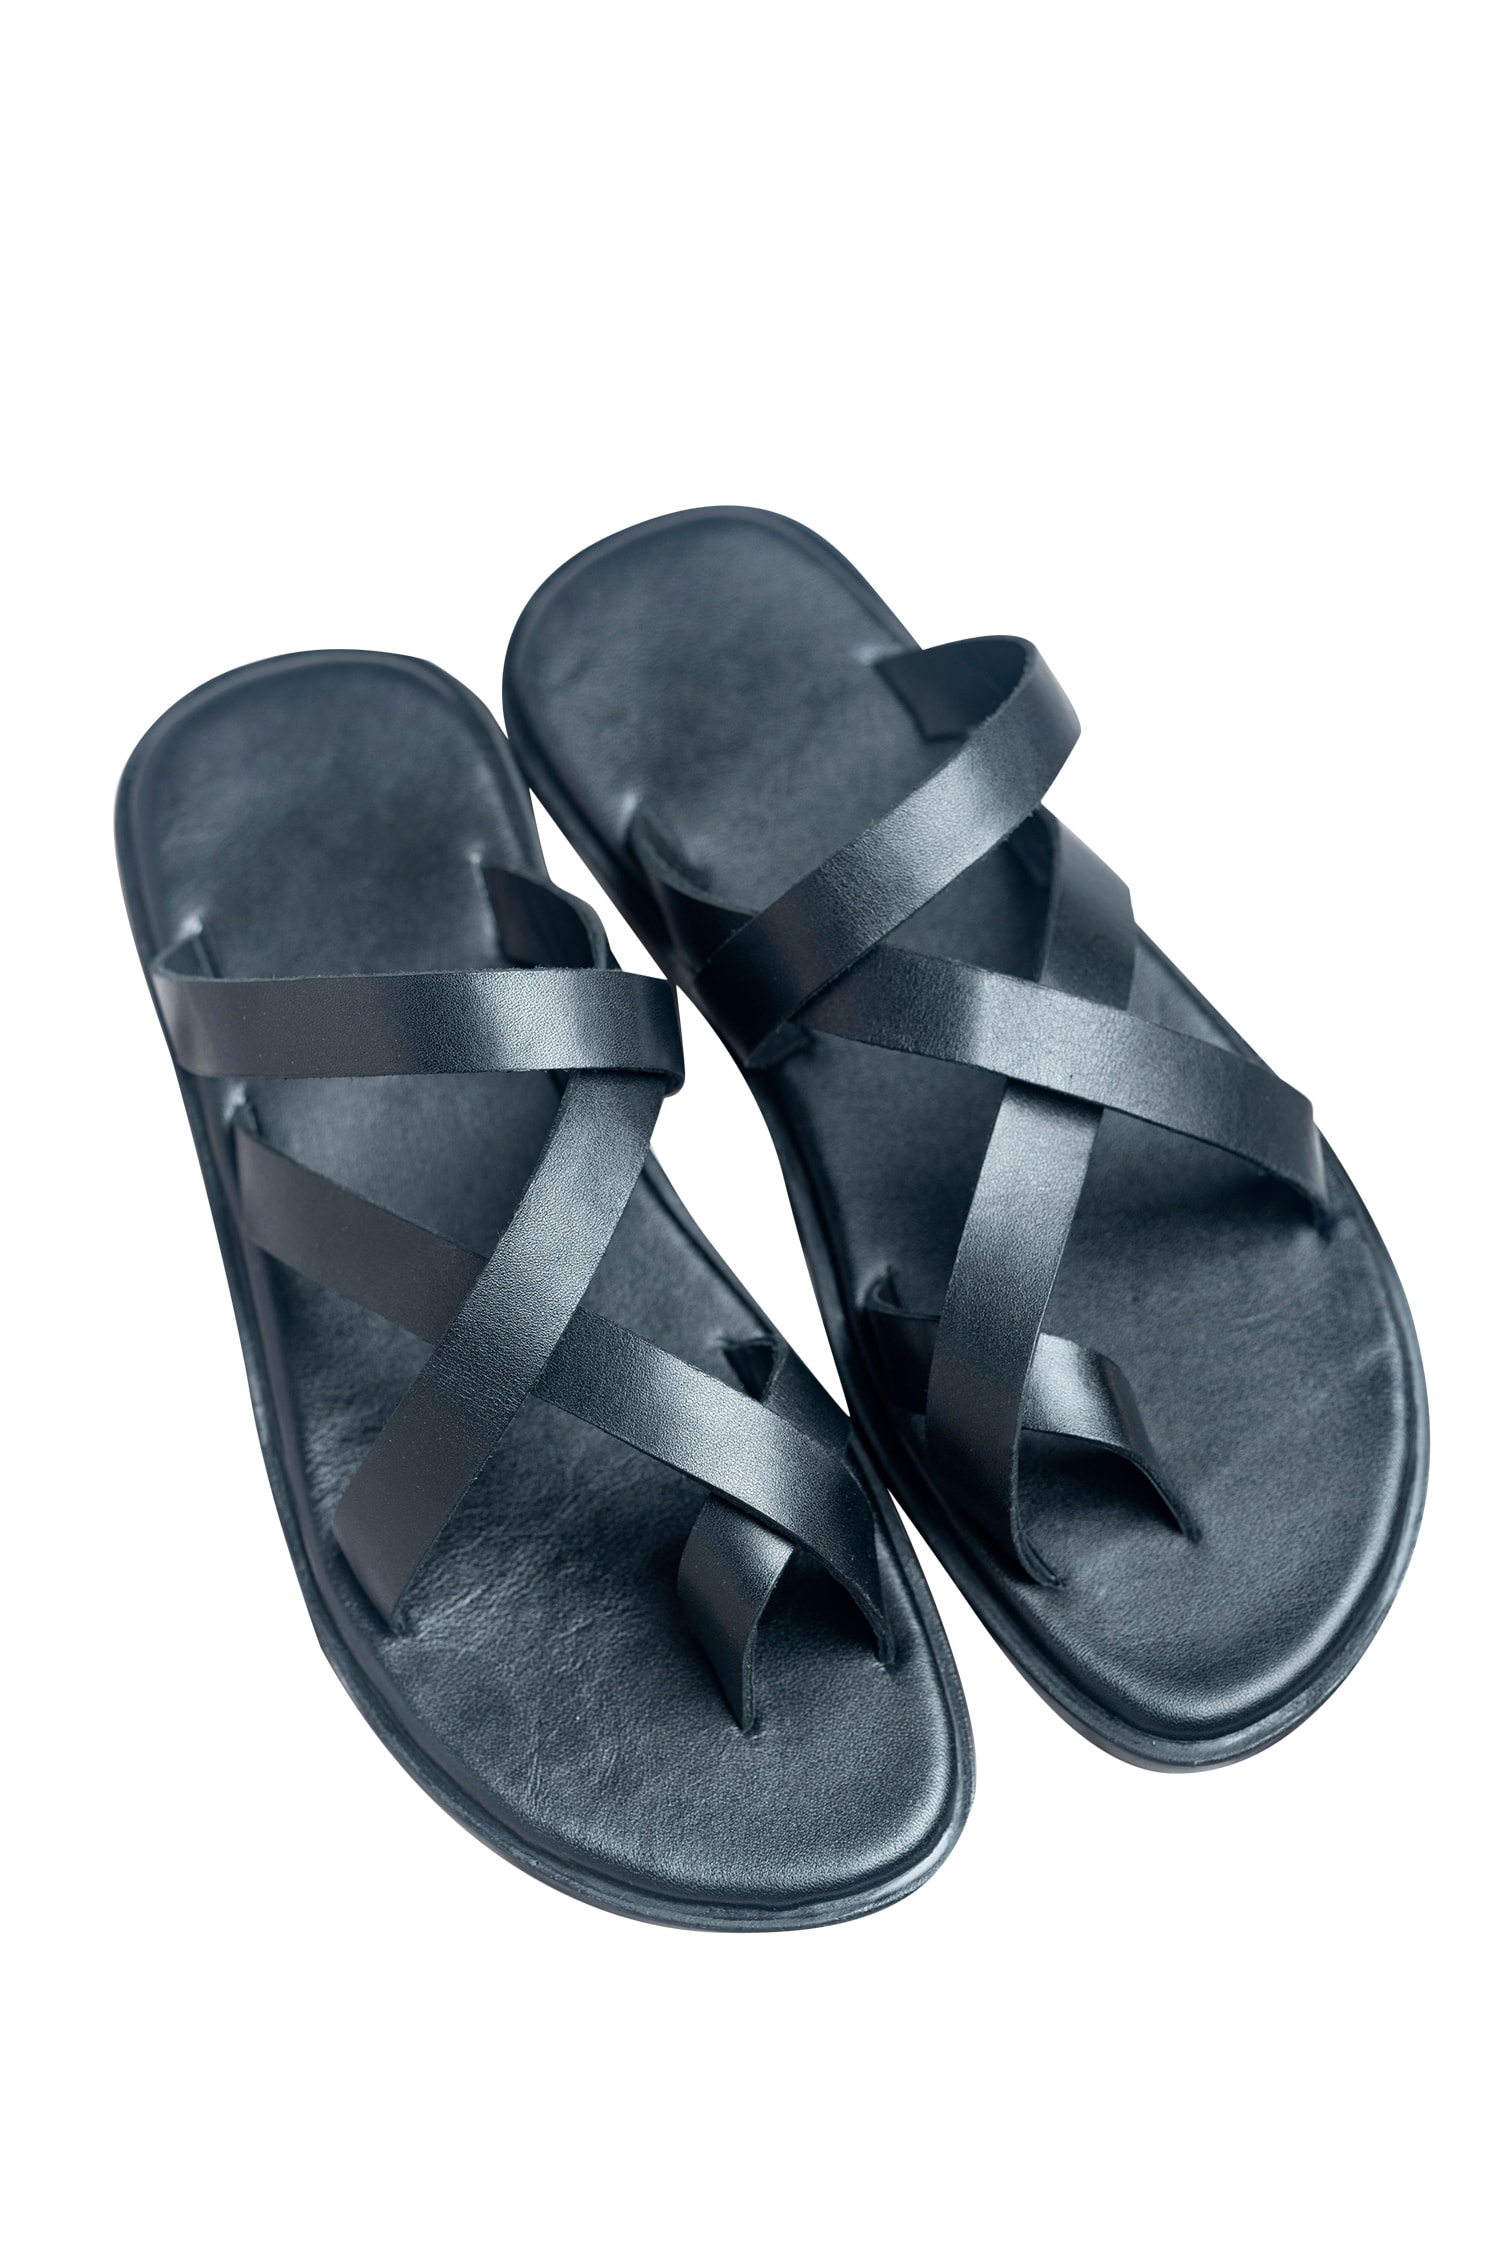 Dmodot Black Cross Strap Sandals